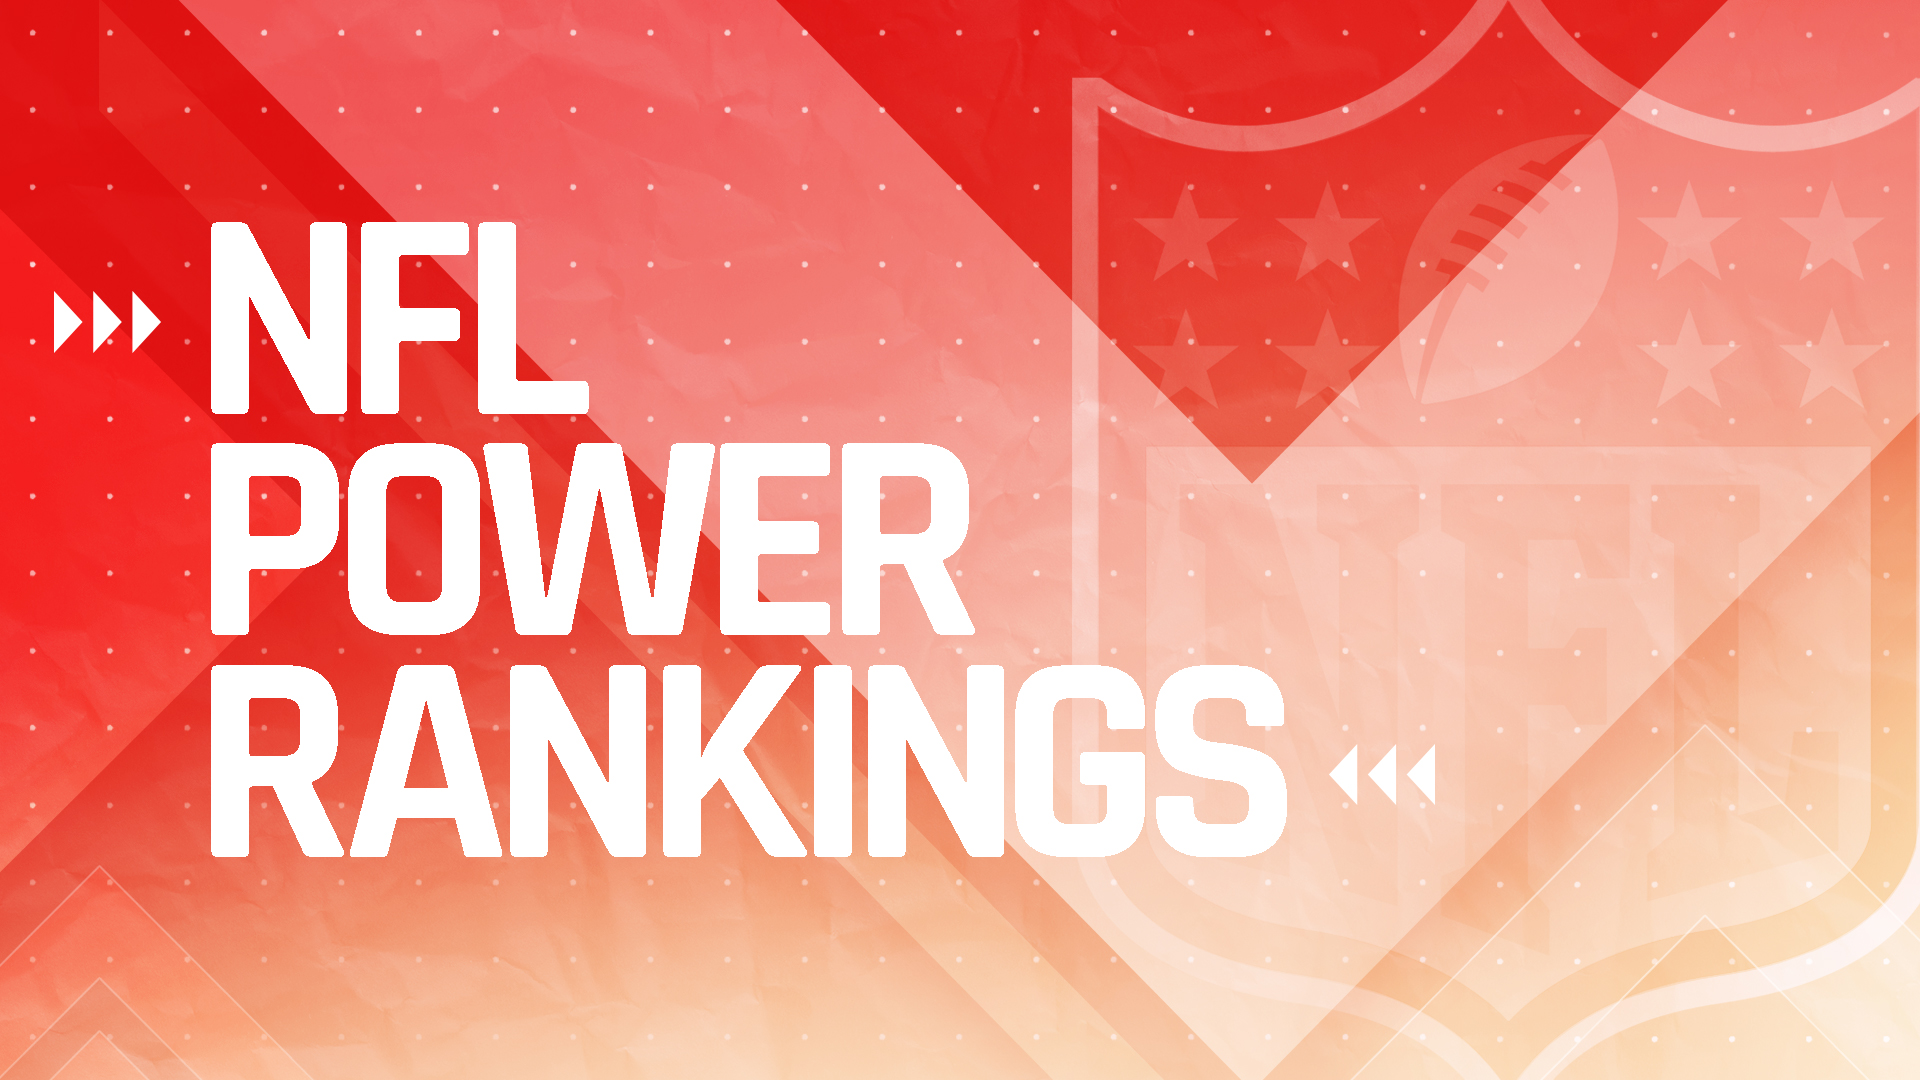 NFL Power Rankings/via sportingnews.com